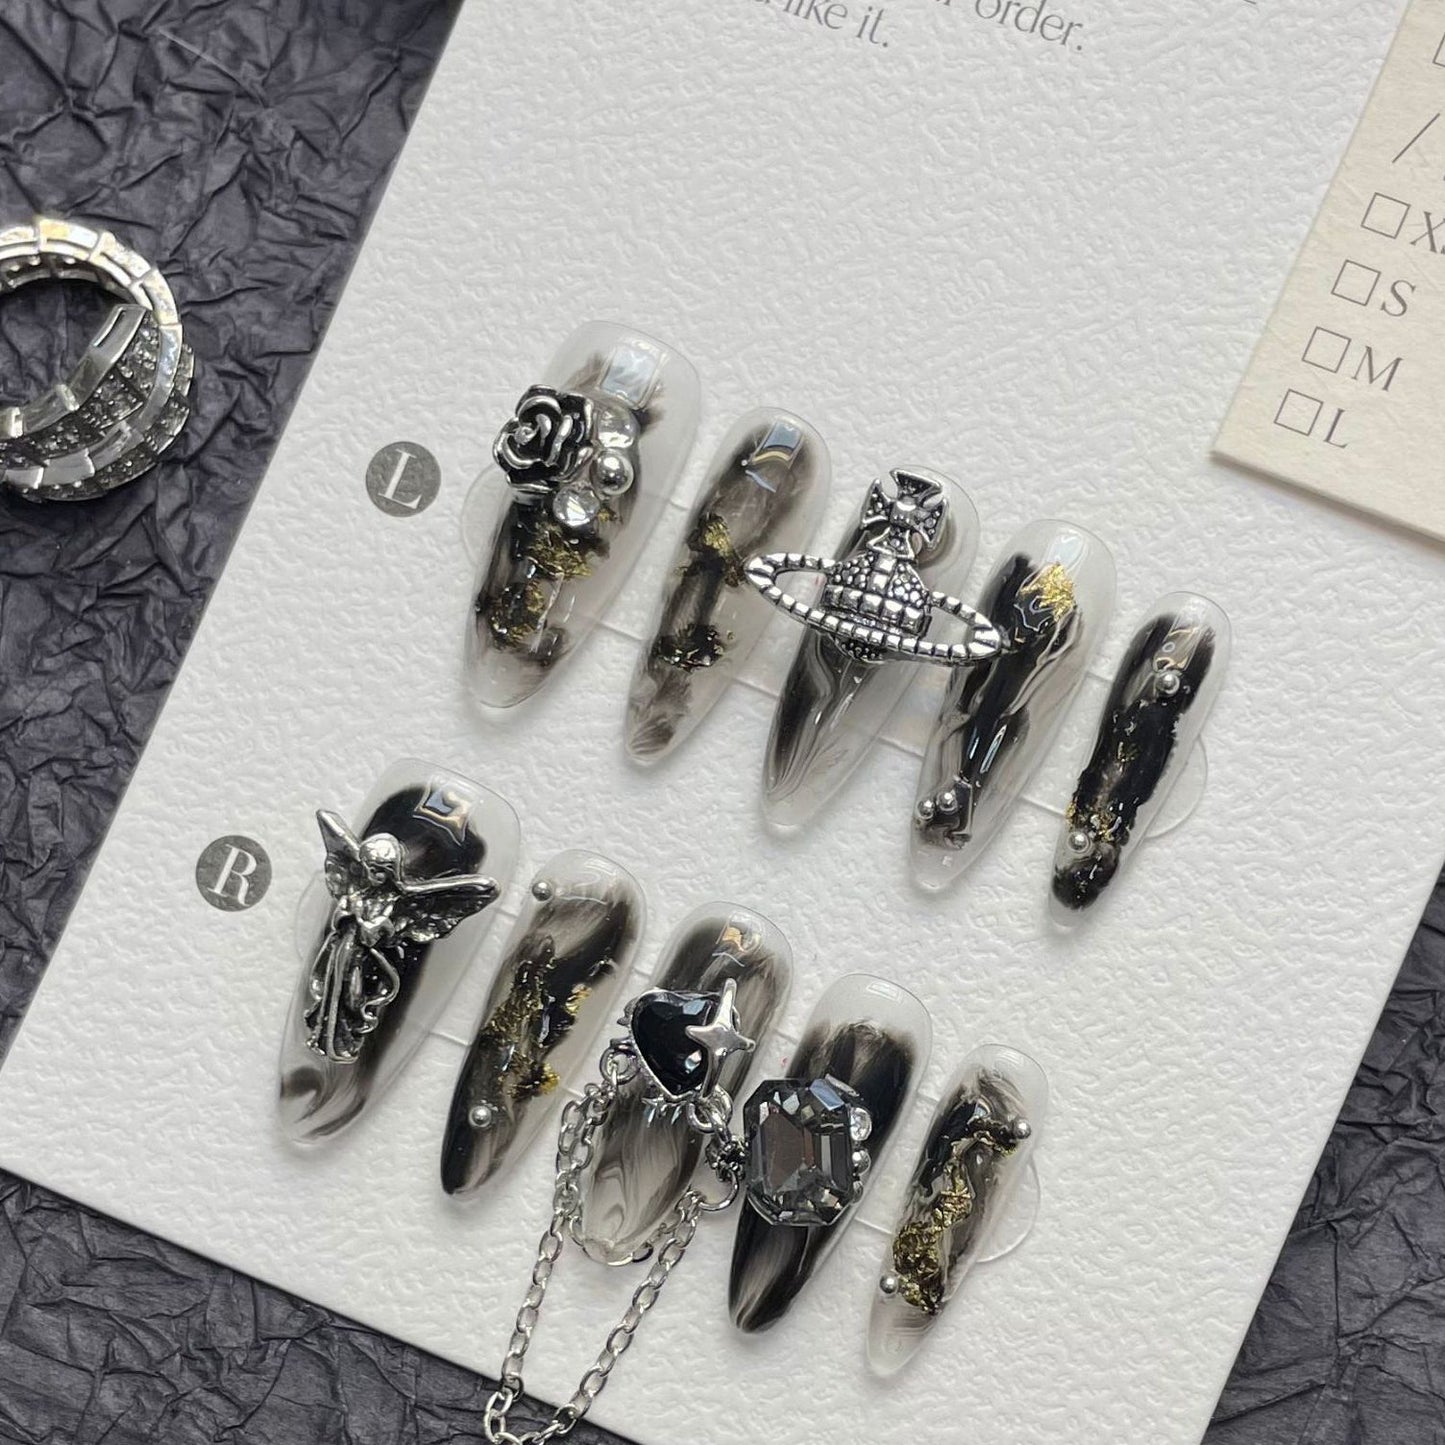 1289 Chain black style press on nails 100% handmade false nails black sliver